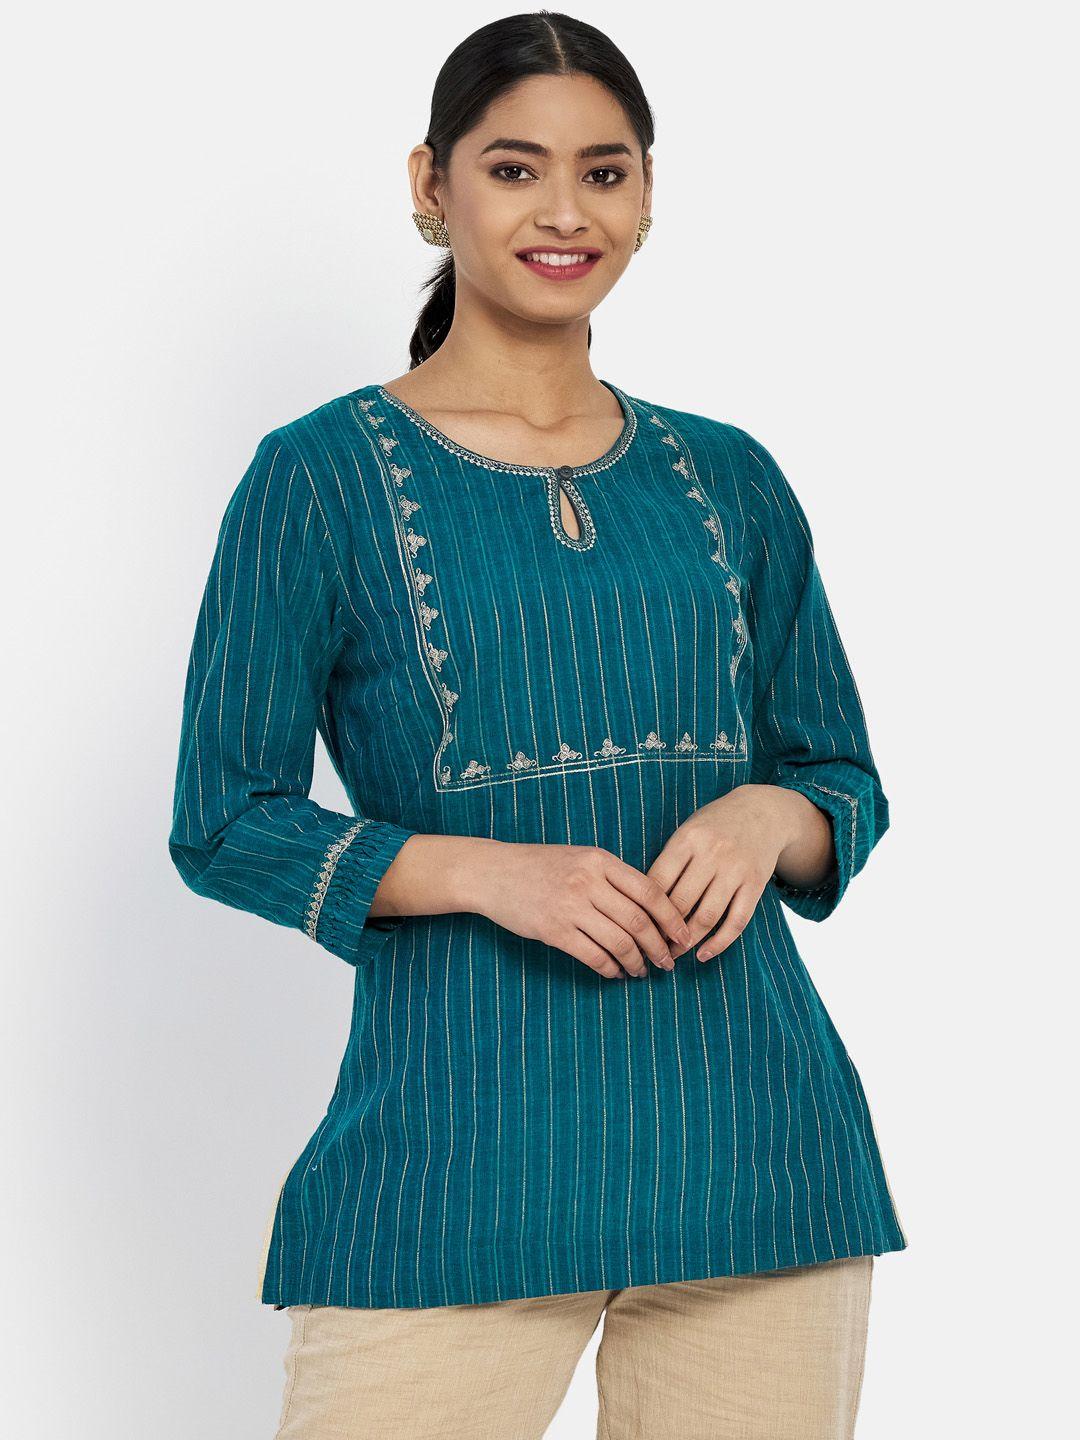 fabindia-teal-green-&-golden-embroidered-kurti